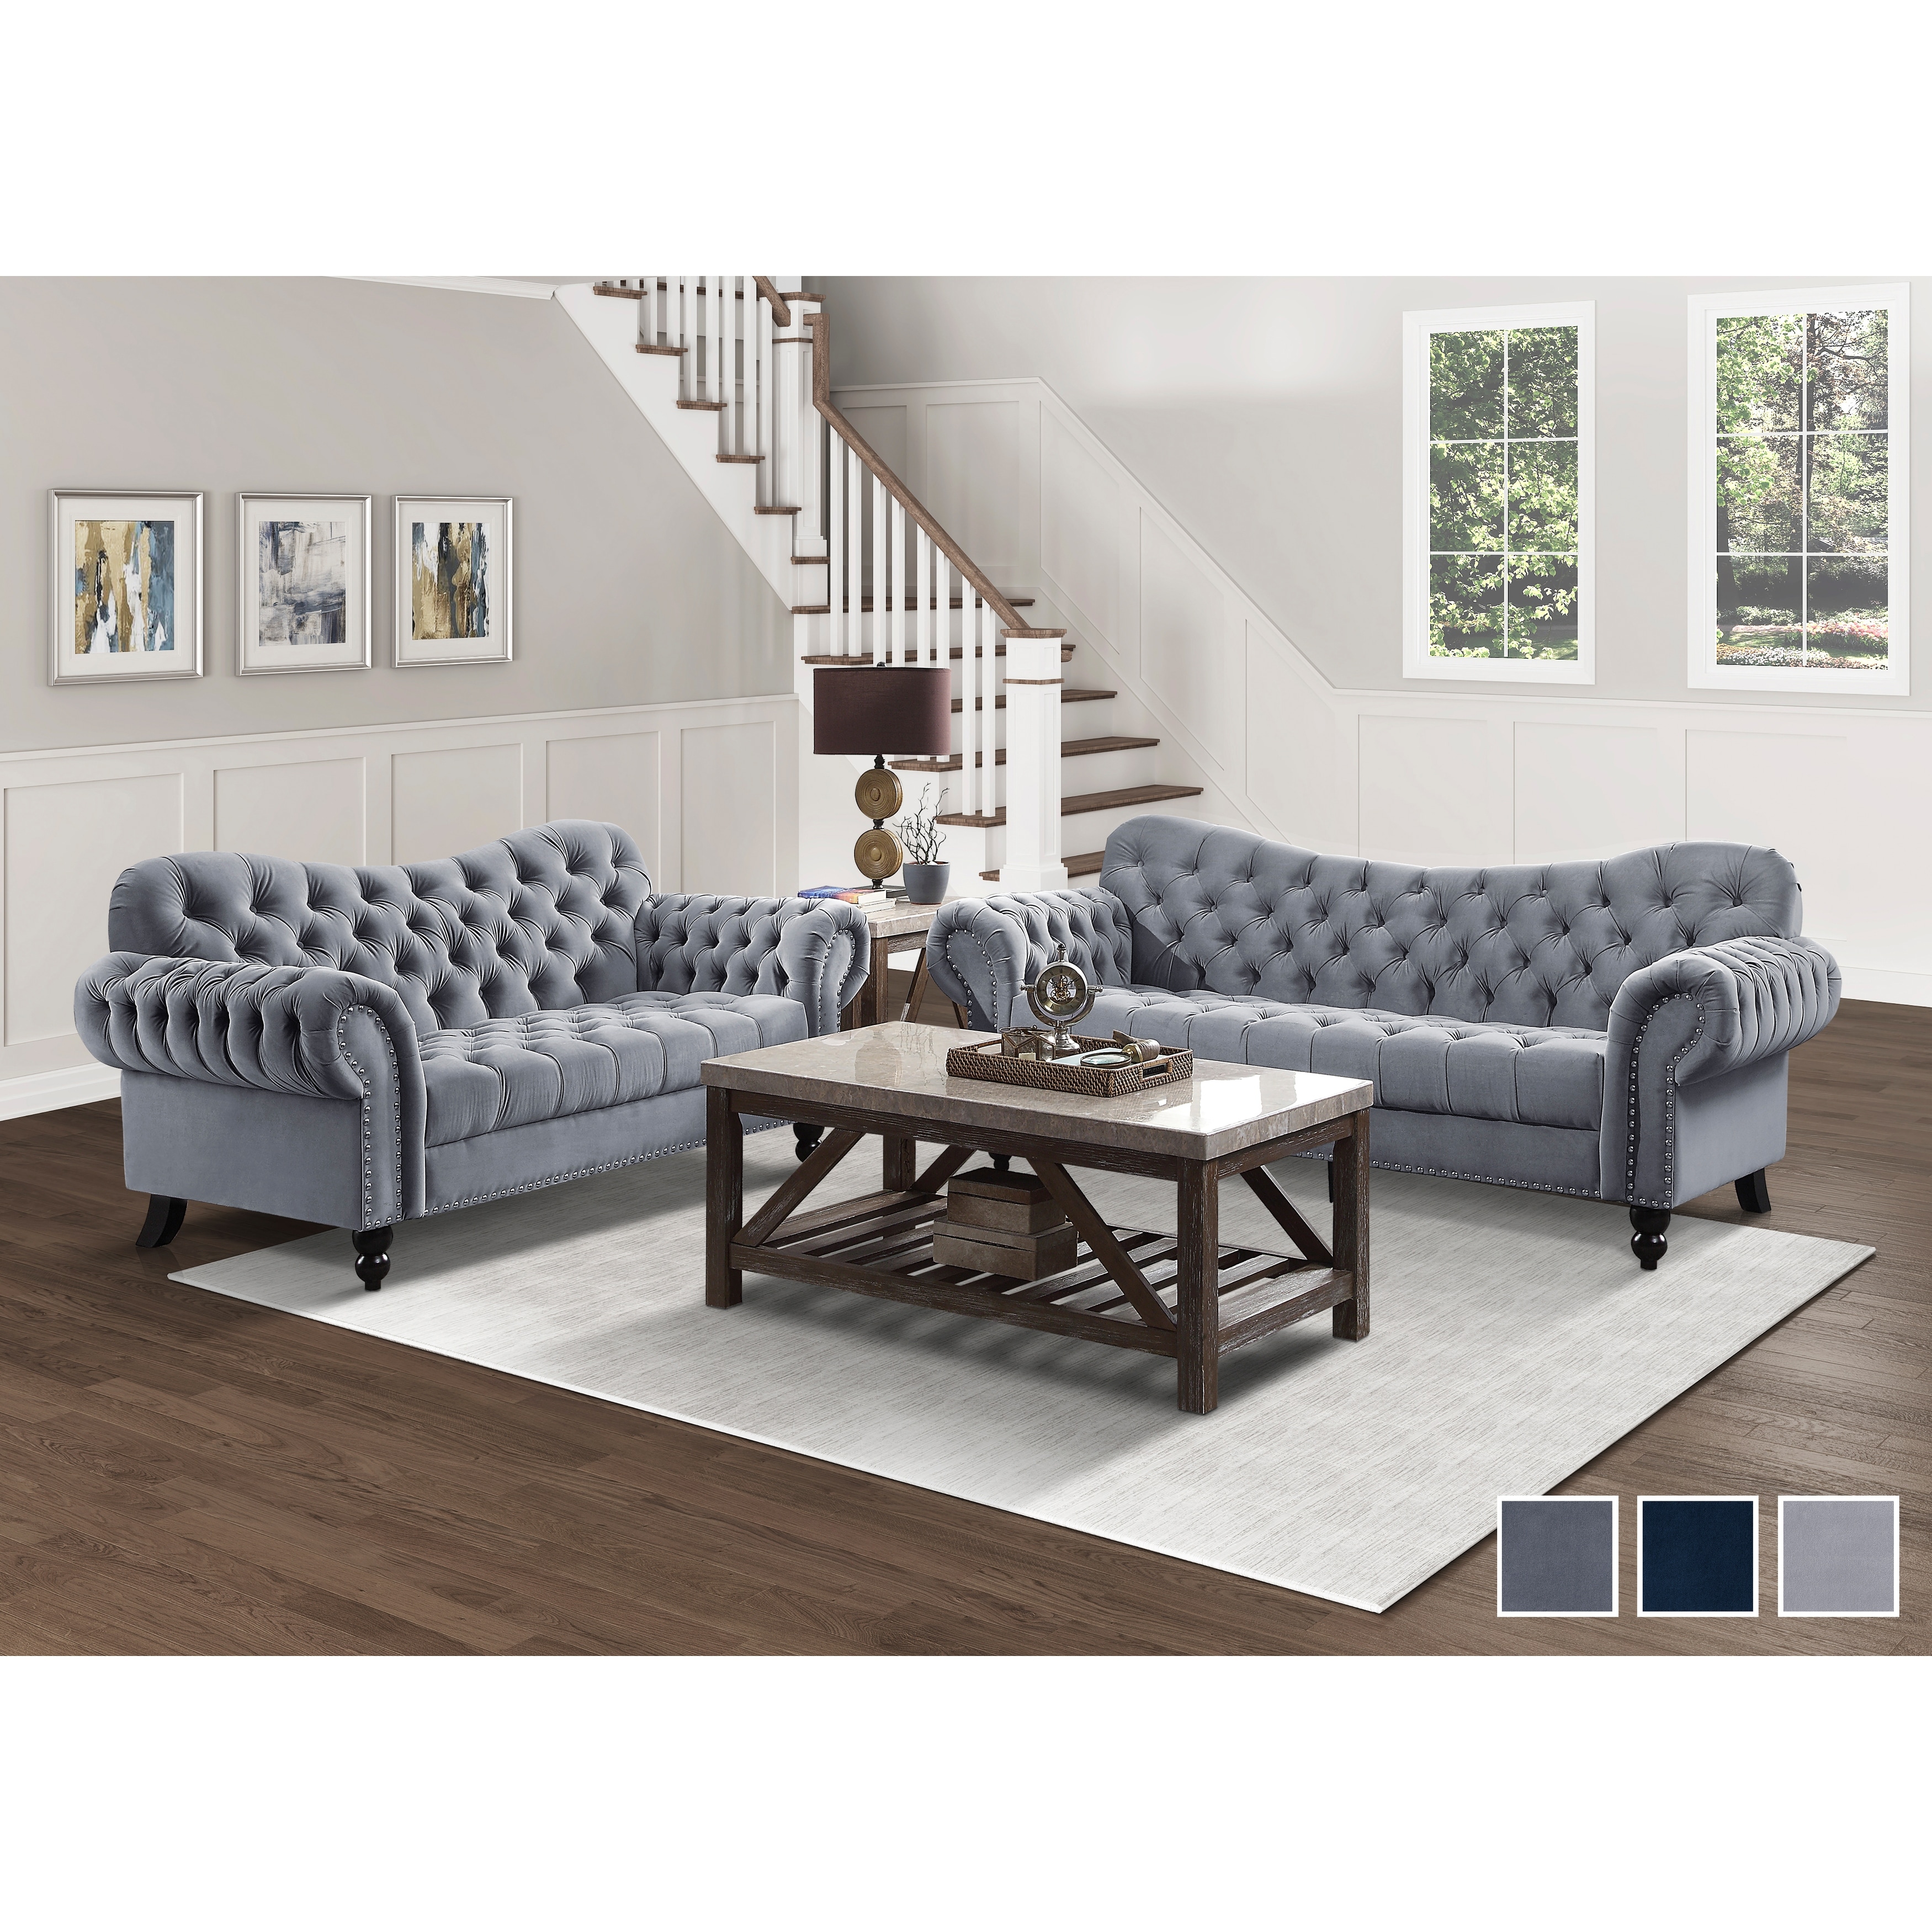 Cardiff 2-Piece Living Room Sofa Set - On Sale - Overstock - 32530270